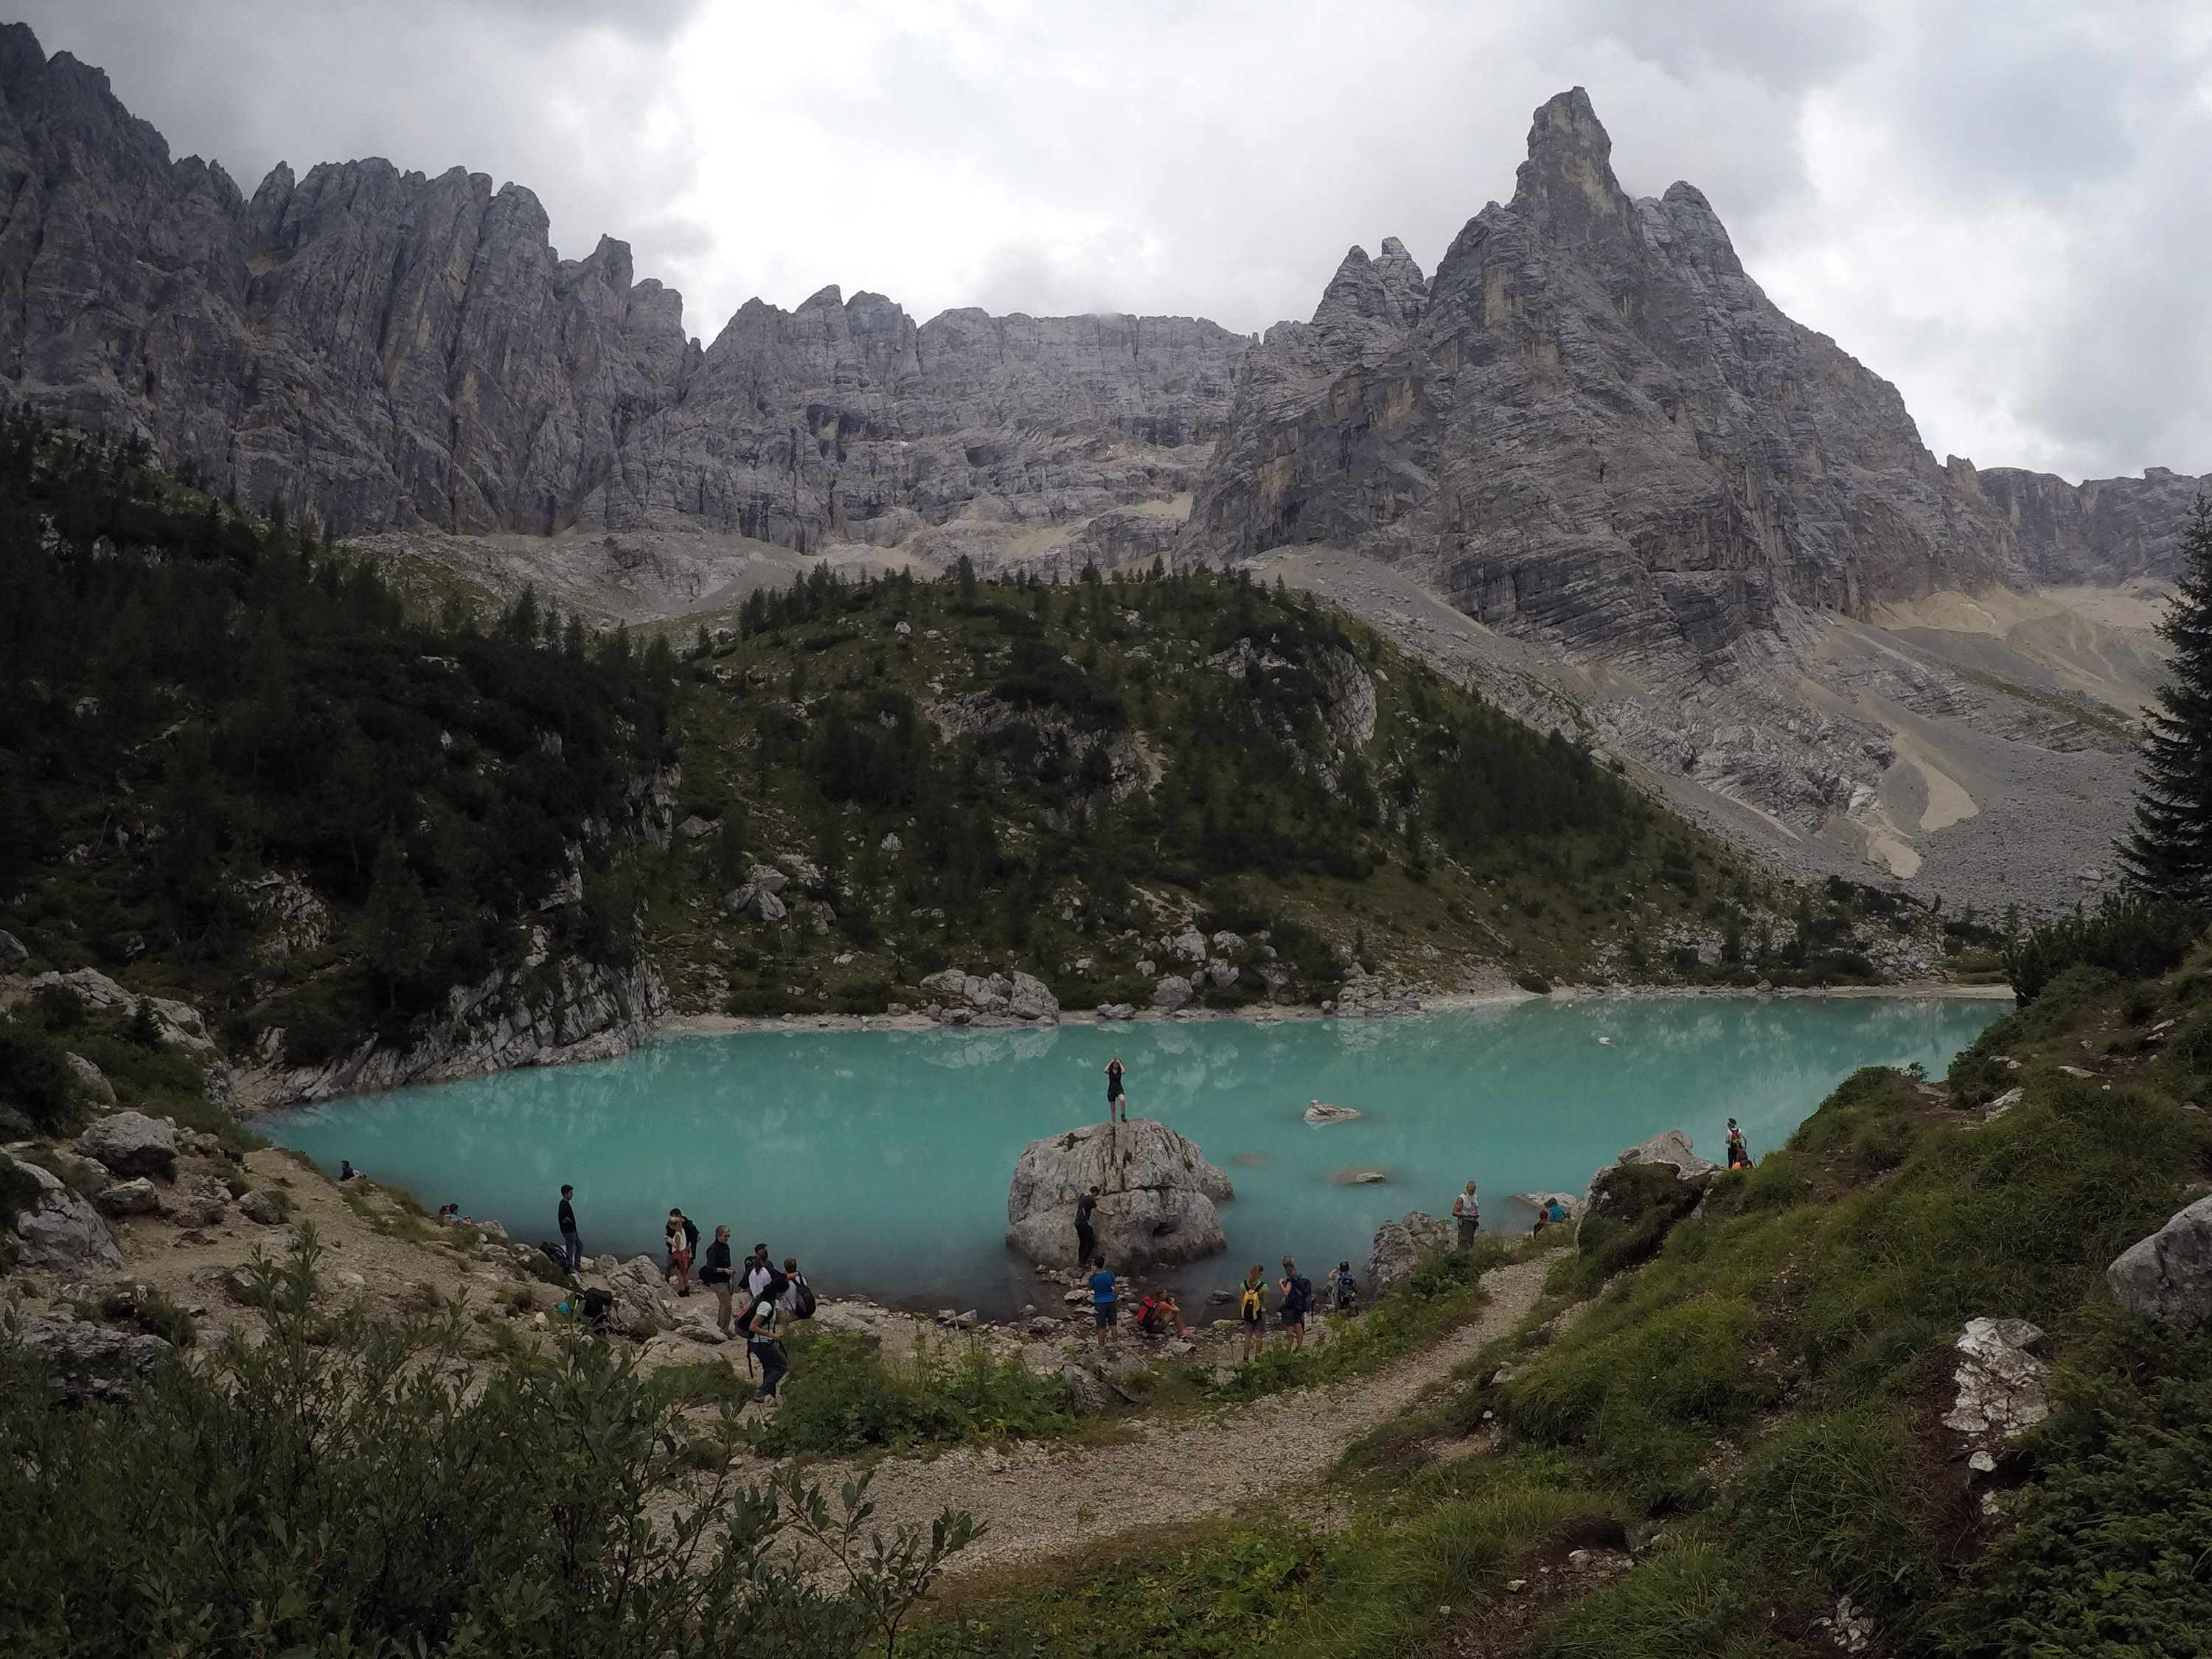 Lago di Sorapis, nad ním vrch Dito di Dio (Prst Boha) 2603 m n.m.